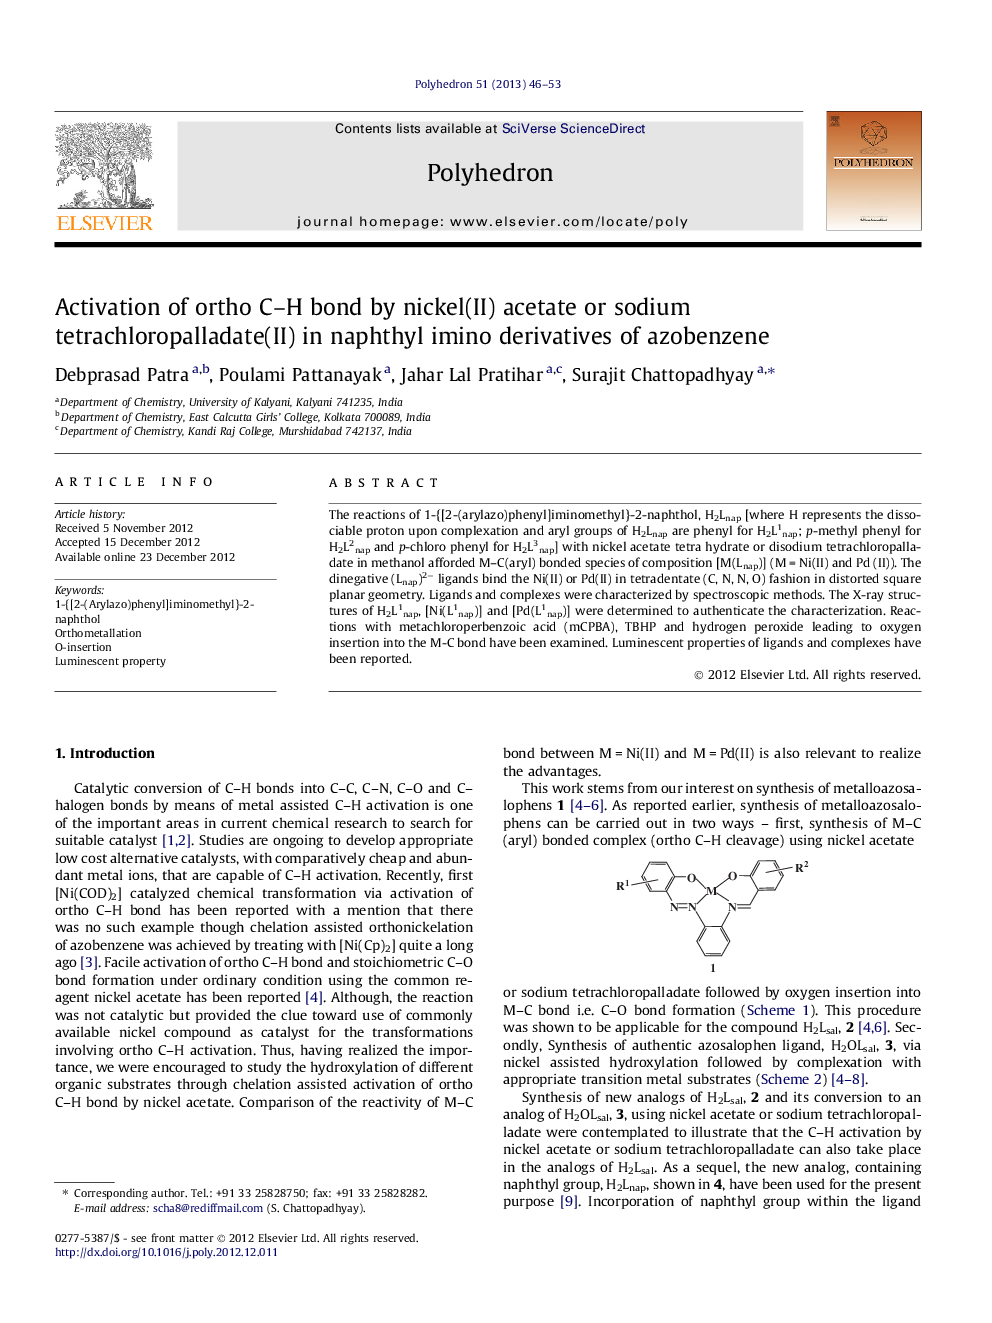 Activation of ortho C–H bond by nickel(II) acetate or sodium tetrachloropalladate(II) in naphthyl imino derivatives of azobenzene